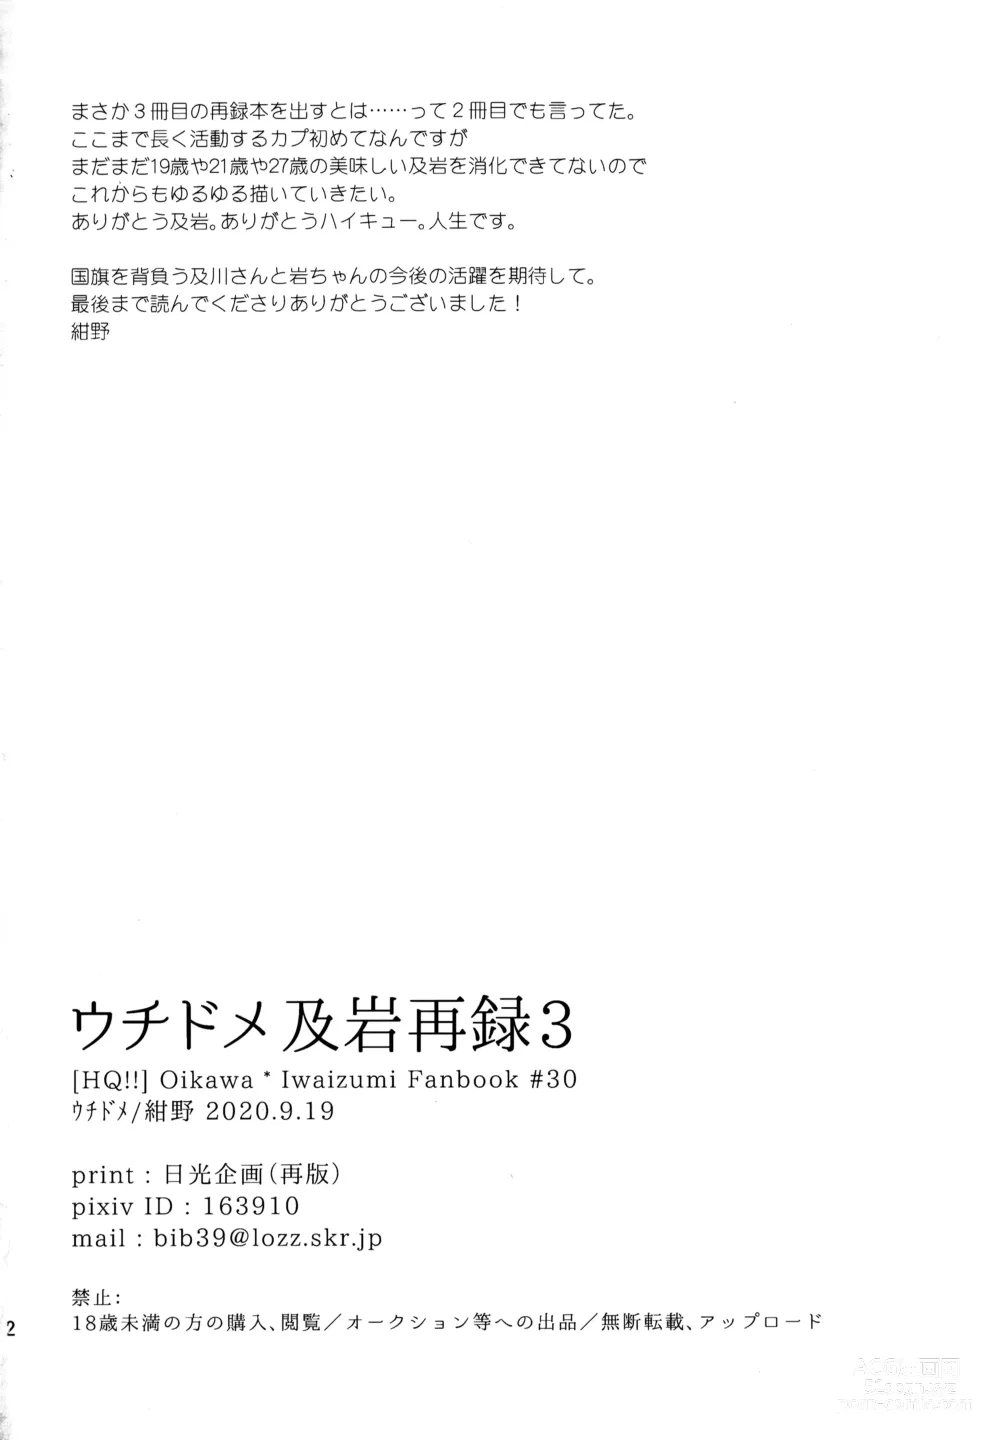 Page 201 of doujinshi Uchidome OiIwa Sairoku 3